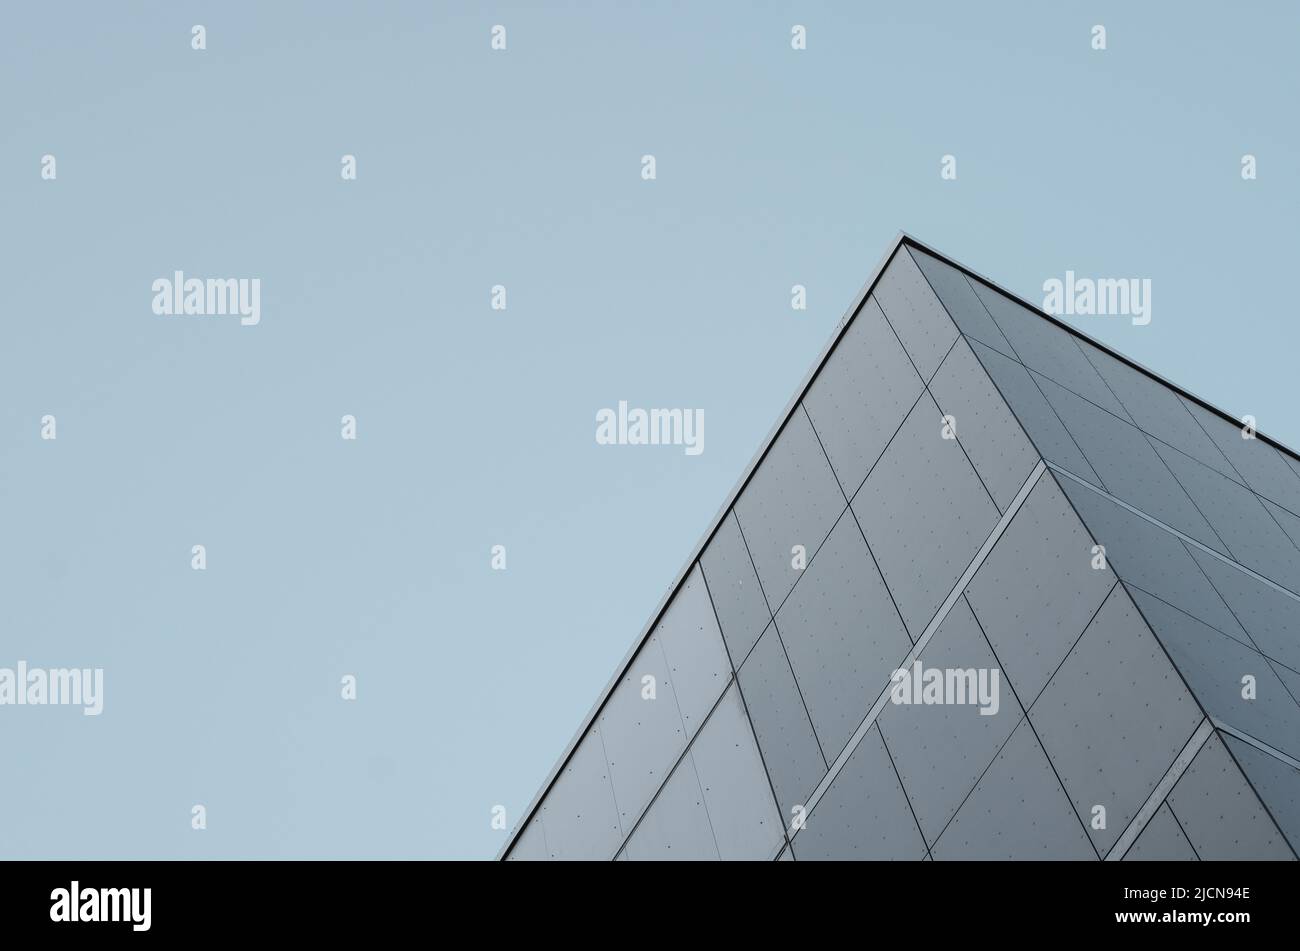 Minimalist Triangular Architecture With Copy Space Stock Photo